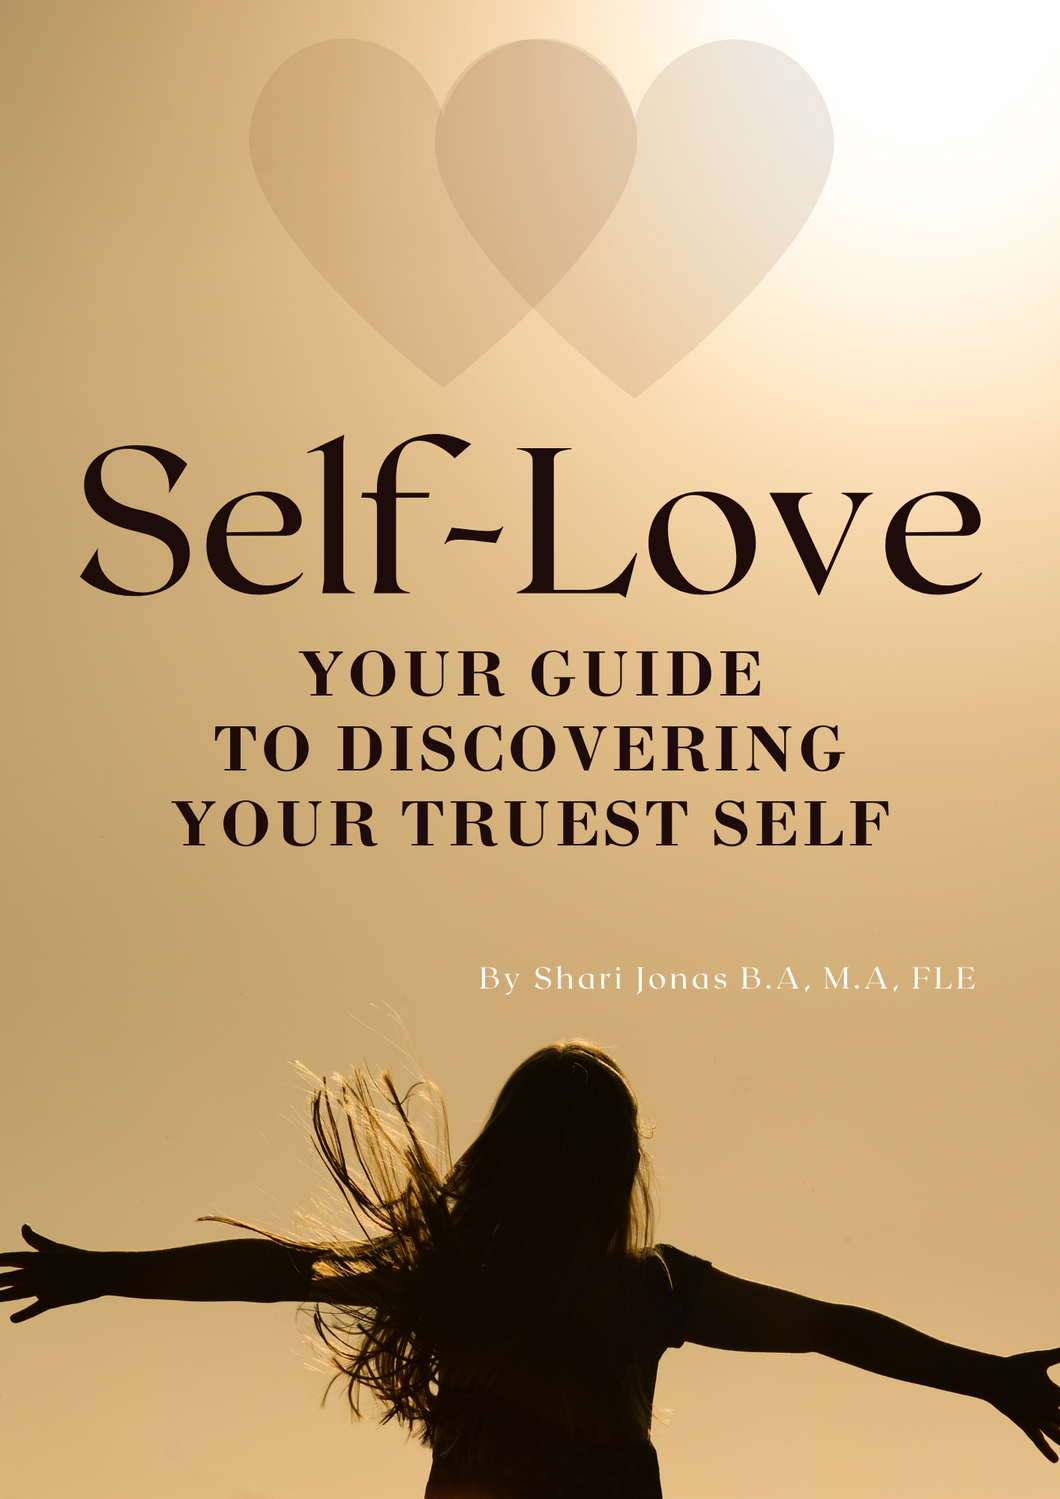 The Self-Love eBook and Workbook